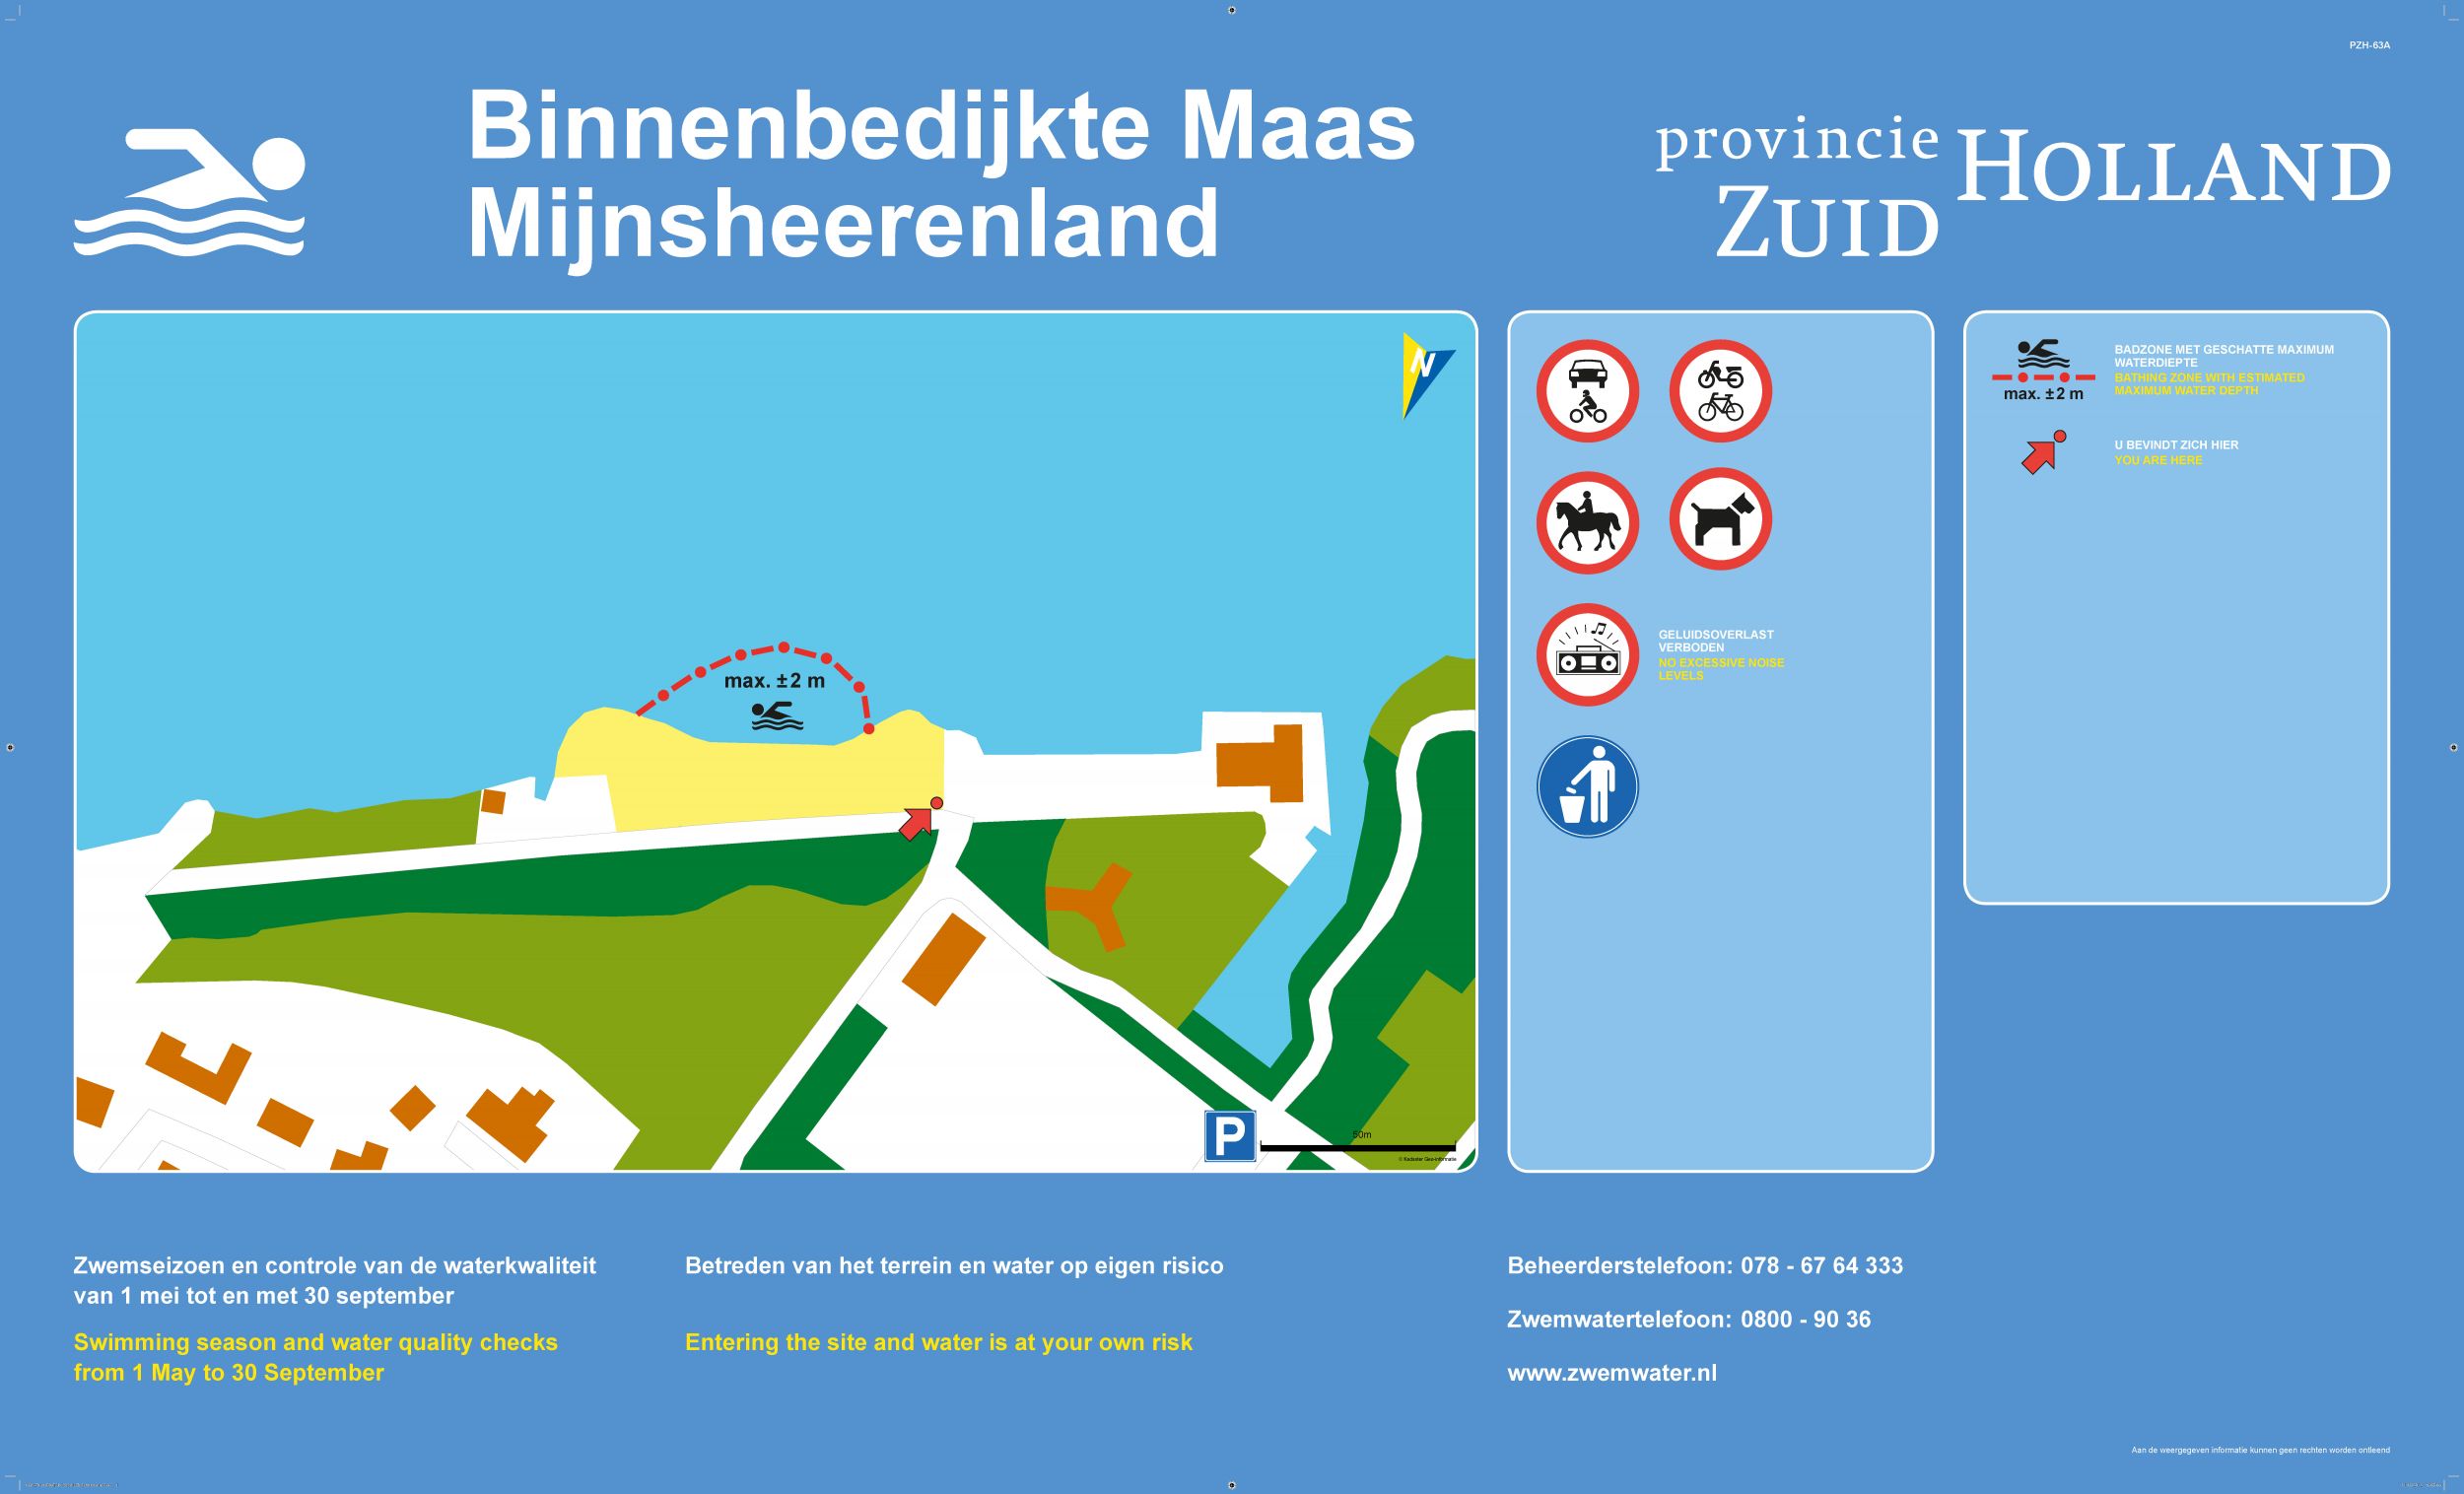 The information board at the swimming location Binnenbedijkte Maas, Mijnsheerenland